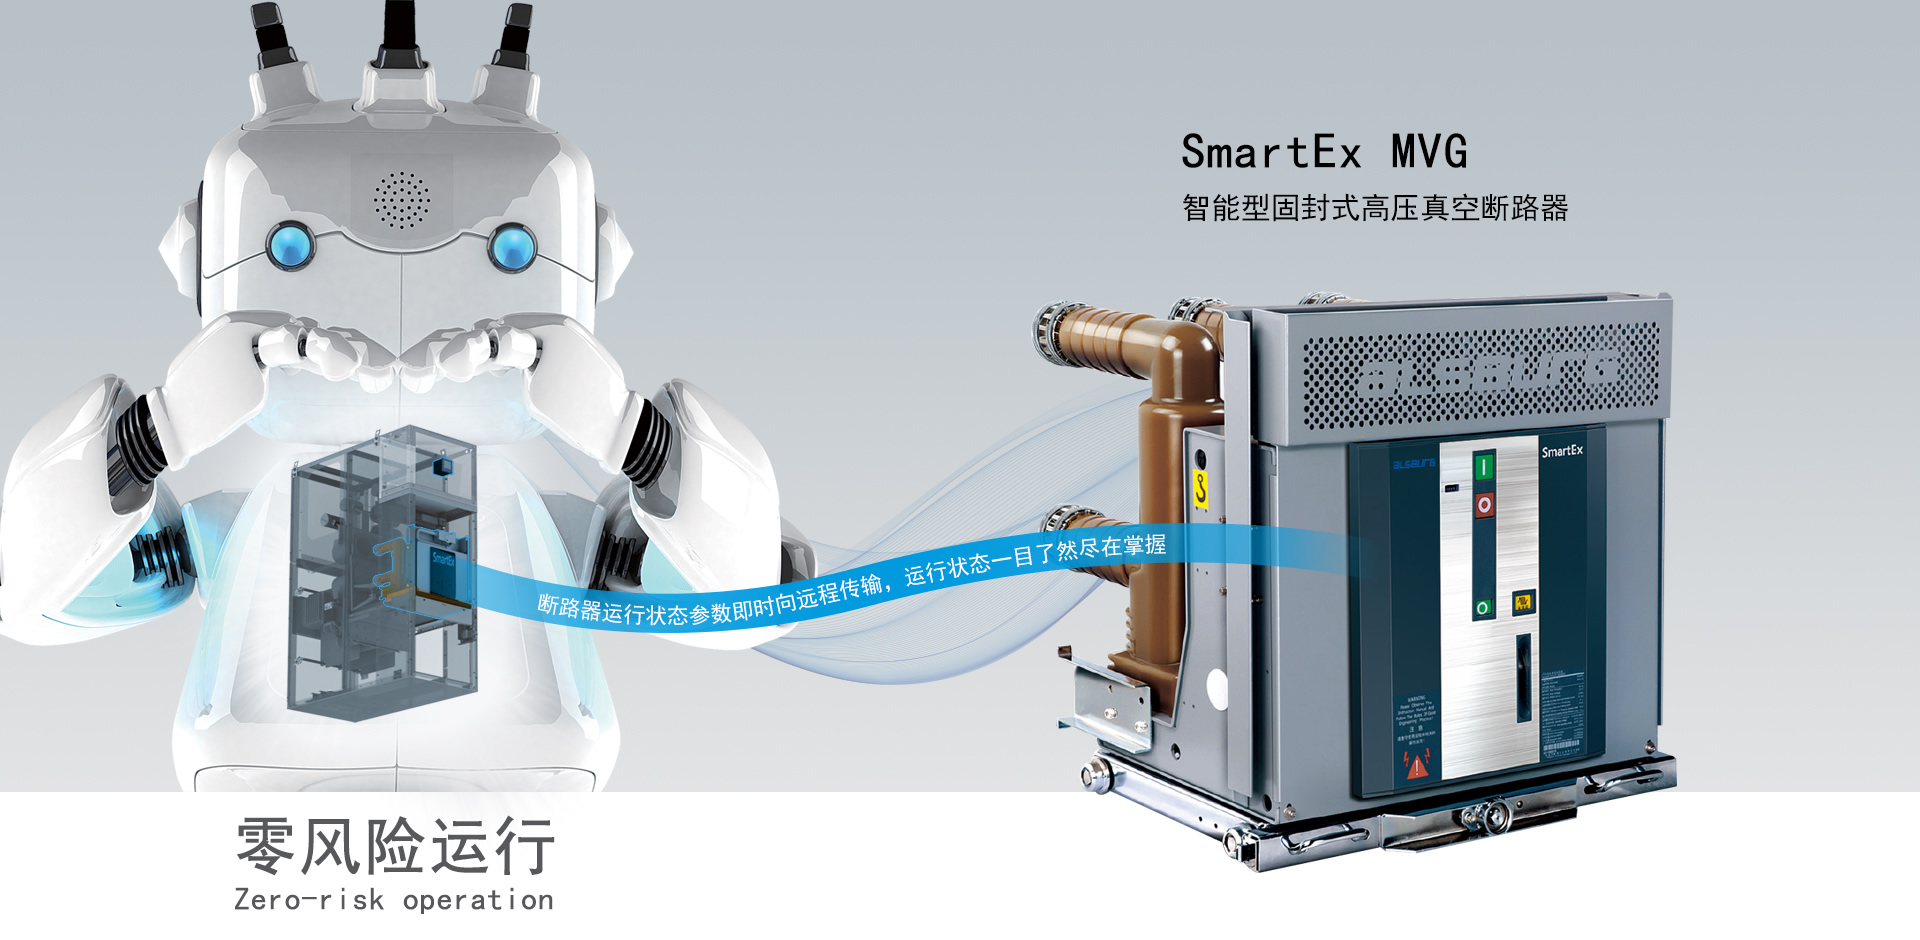 SmartEx MVG 智能型固封式高压真空断路器